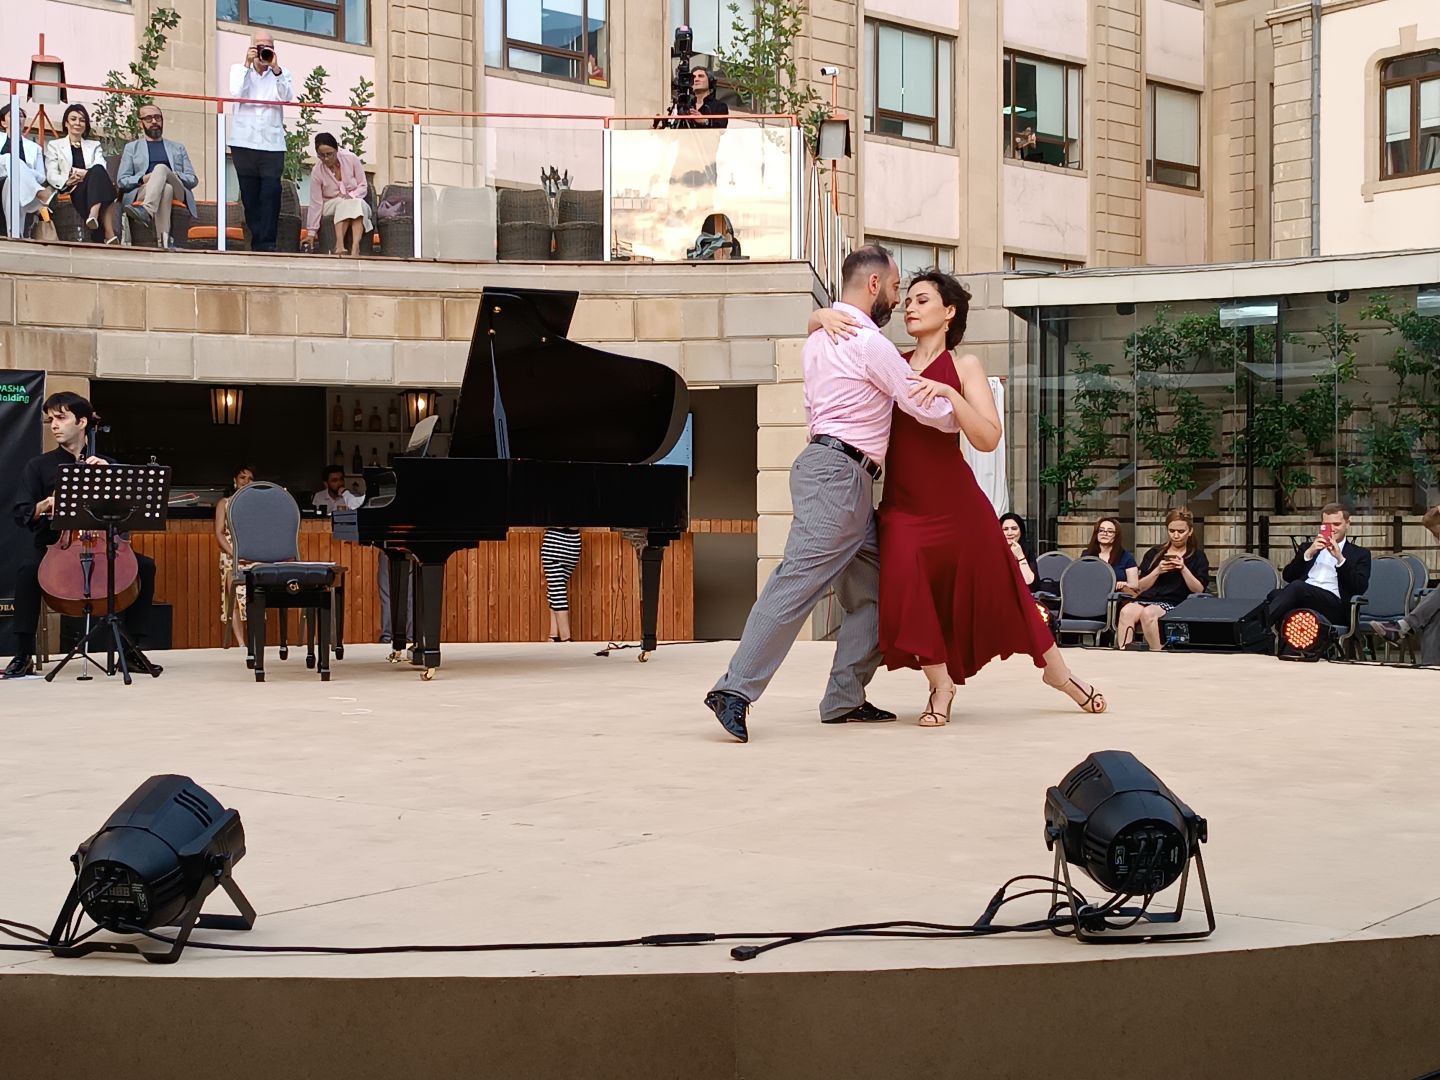 Baku Piano Festival: Passionate tango music makes crowd dance and roar [PHOTOS]